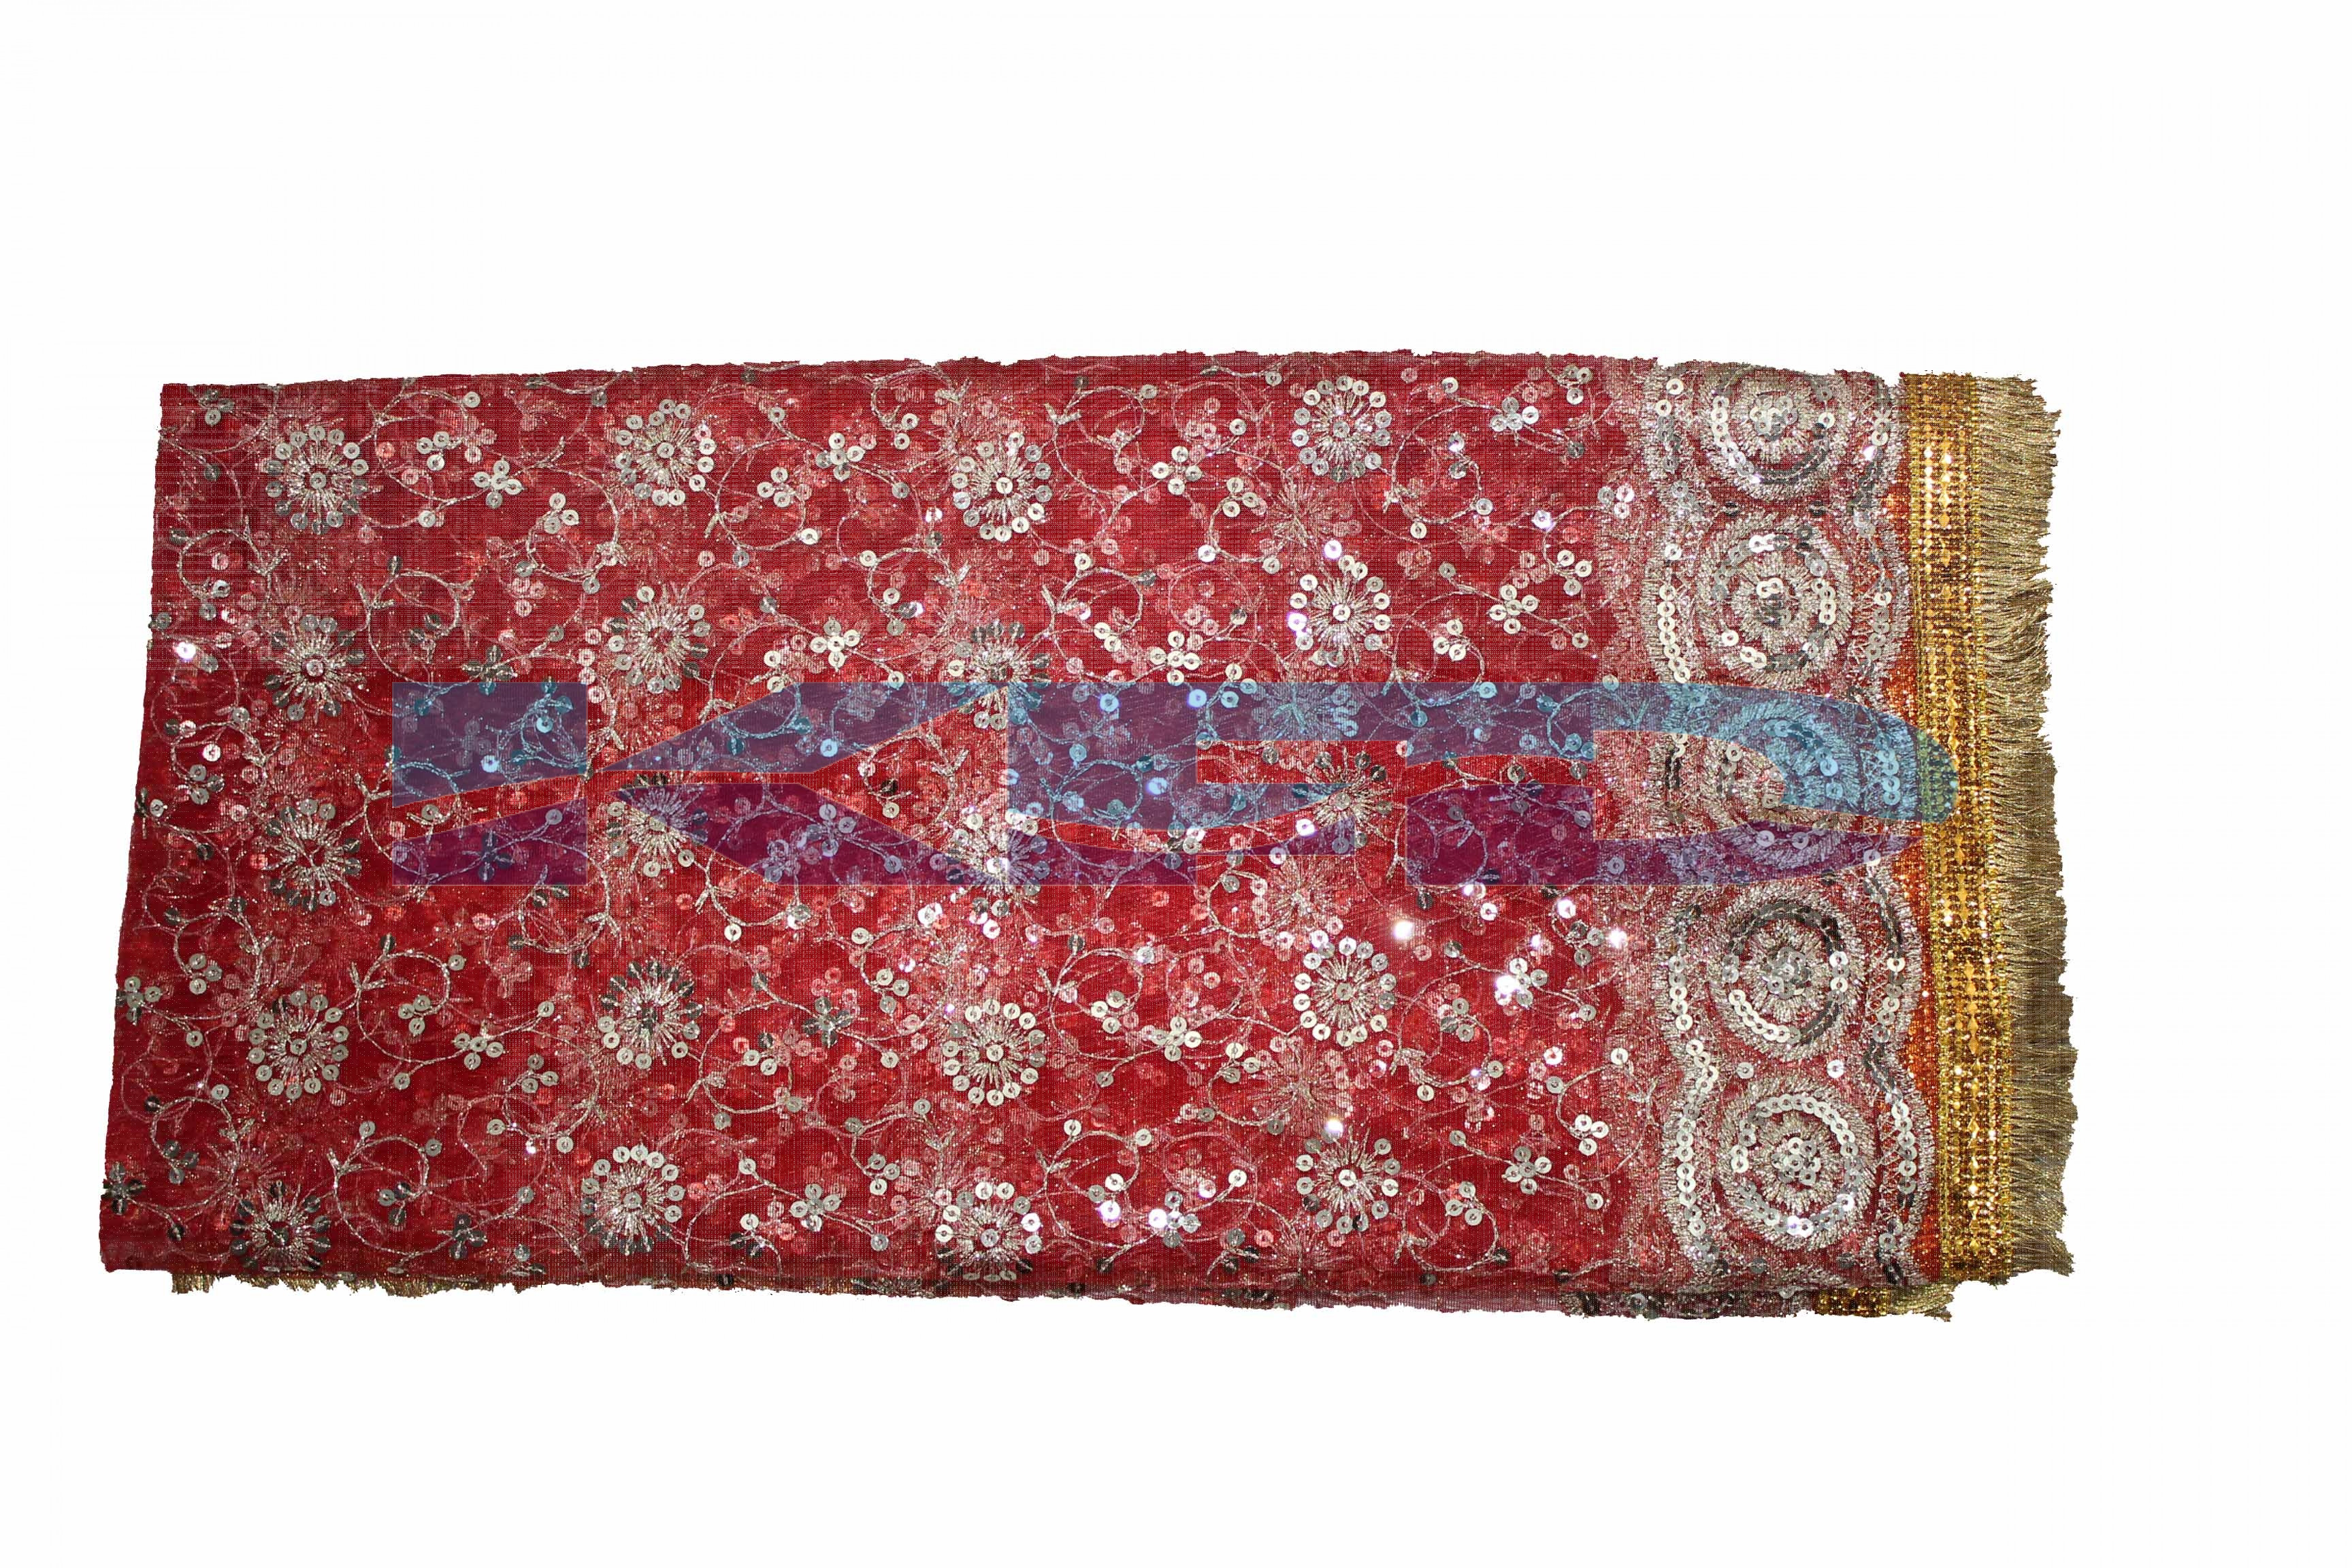 Mata Ki Chunari Full Size 2.25 Meter /Navratri Chunni/Devi Mata Full Jari Chunari/Chunar/Mata chunri/Durga Devi Chunni With Golden Embroidery And Lace,Used For Various Hindu Puja